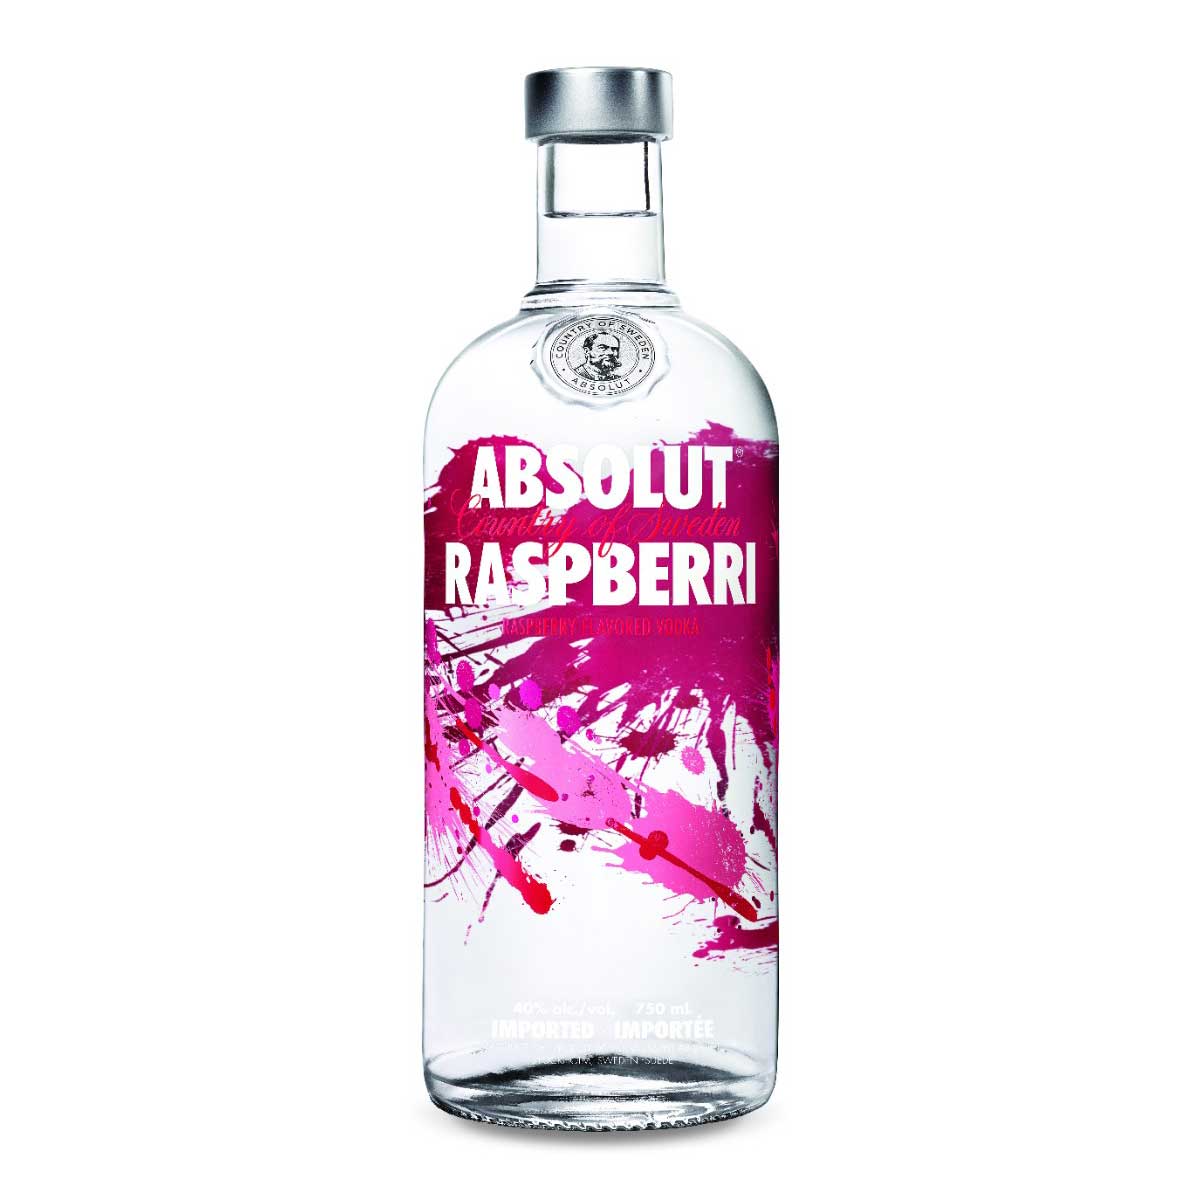 Tag Liquor Stores Delivery BC – Absolut Raspberri Vodka 750ml